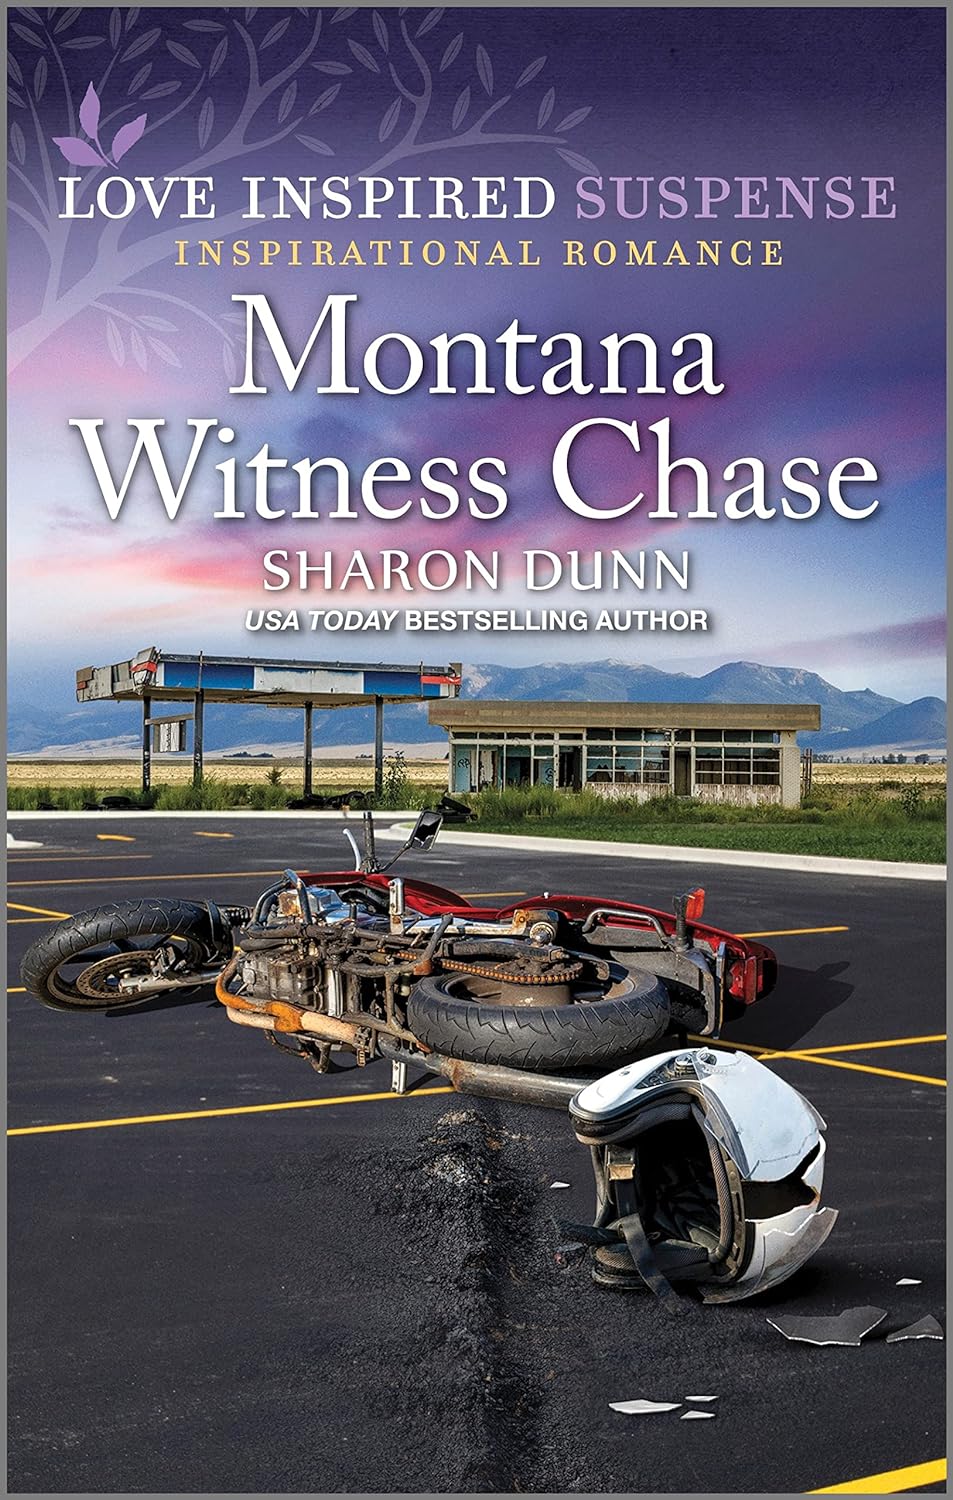 Montana Witness Chase (Love Inspired Suspense)